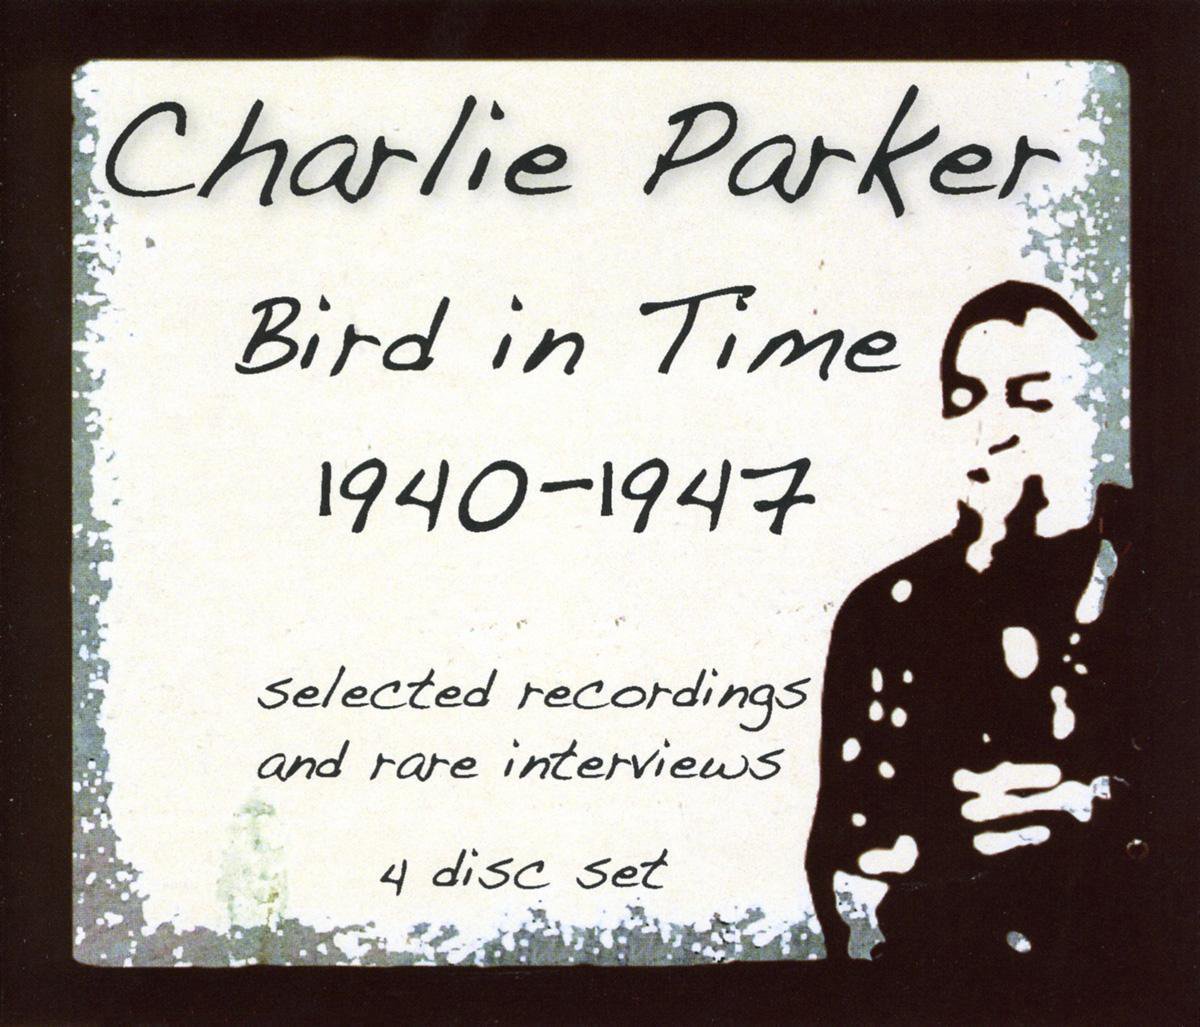 Bird In Time 1940-1947 - Charlie Parker